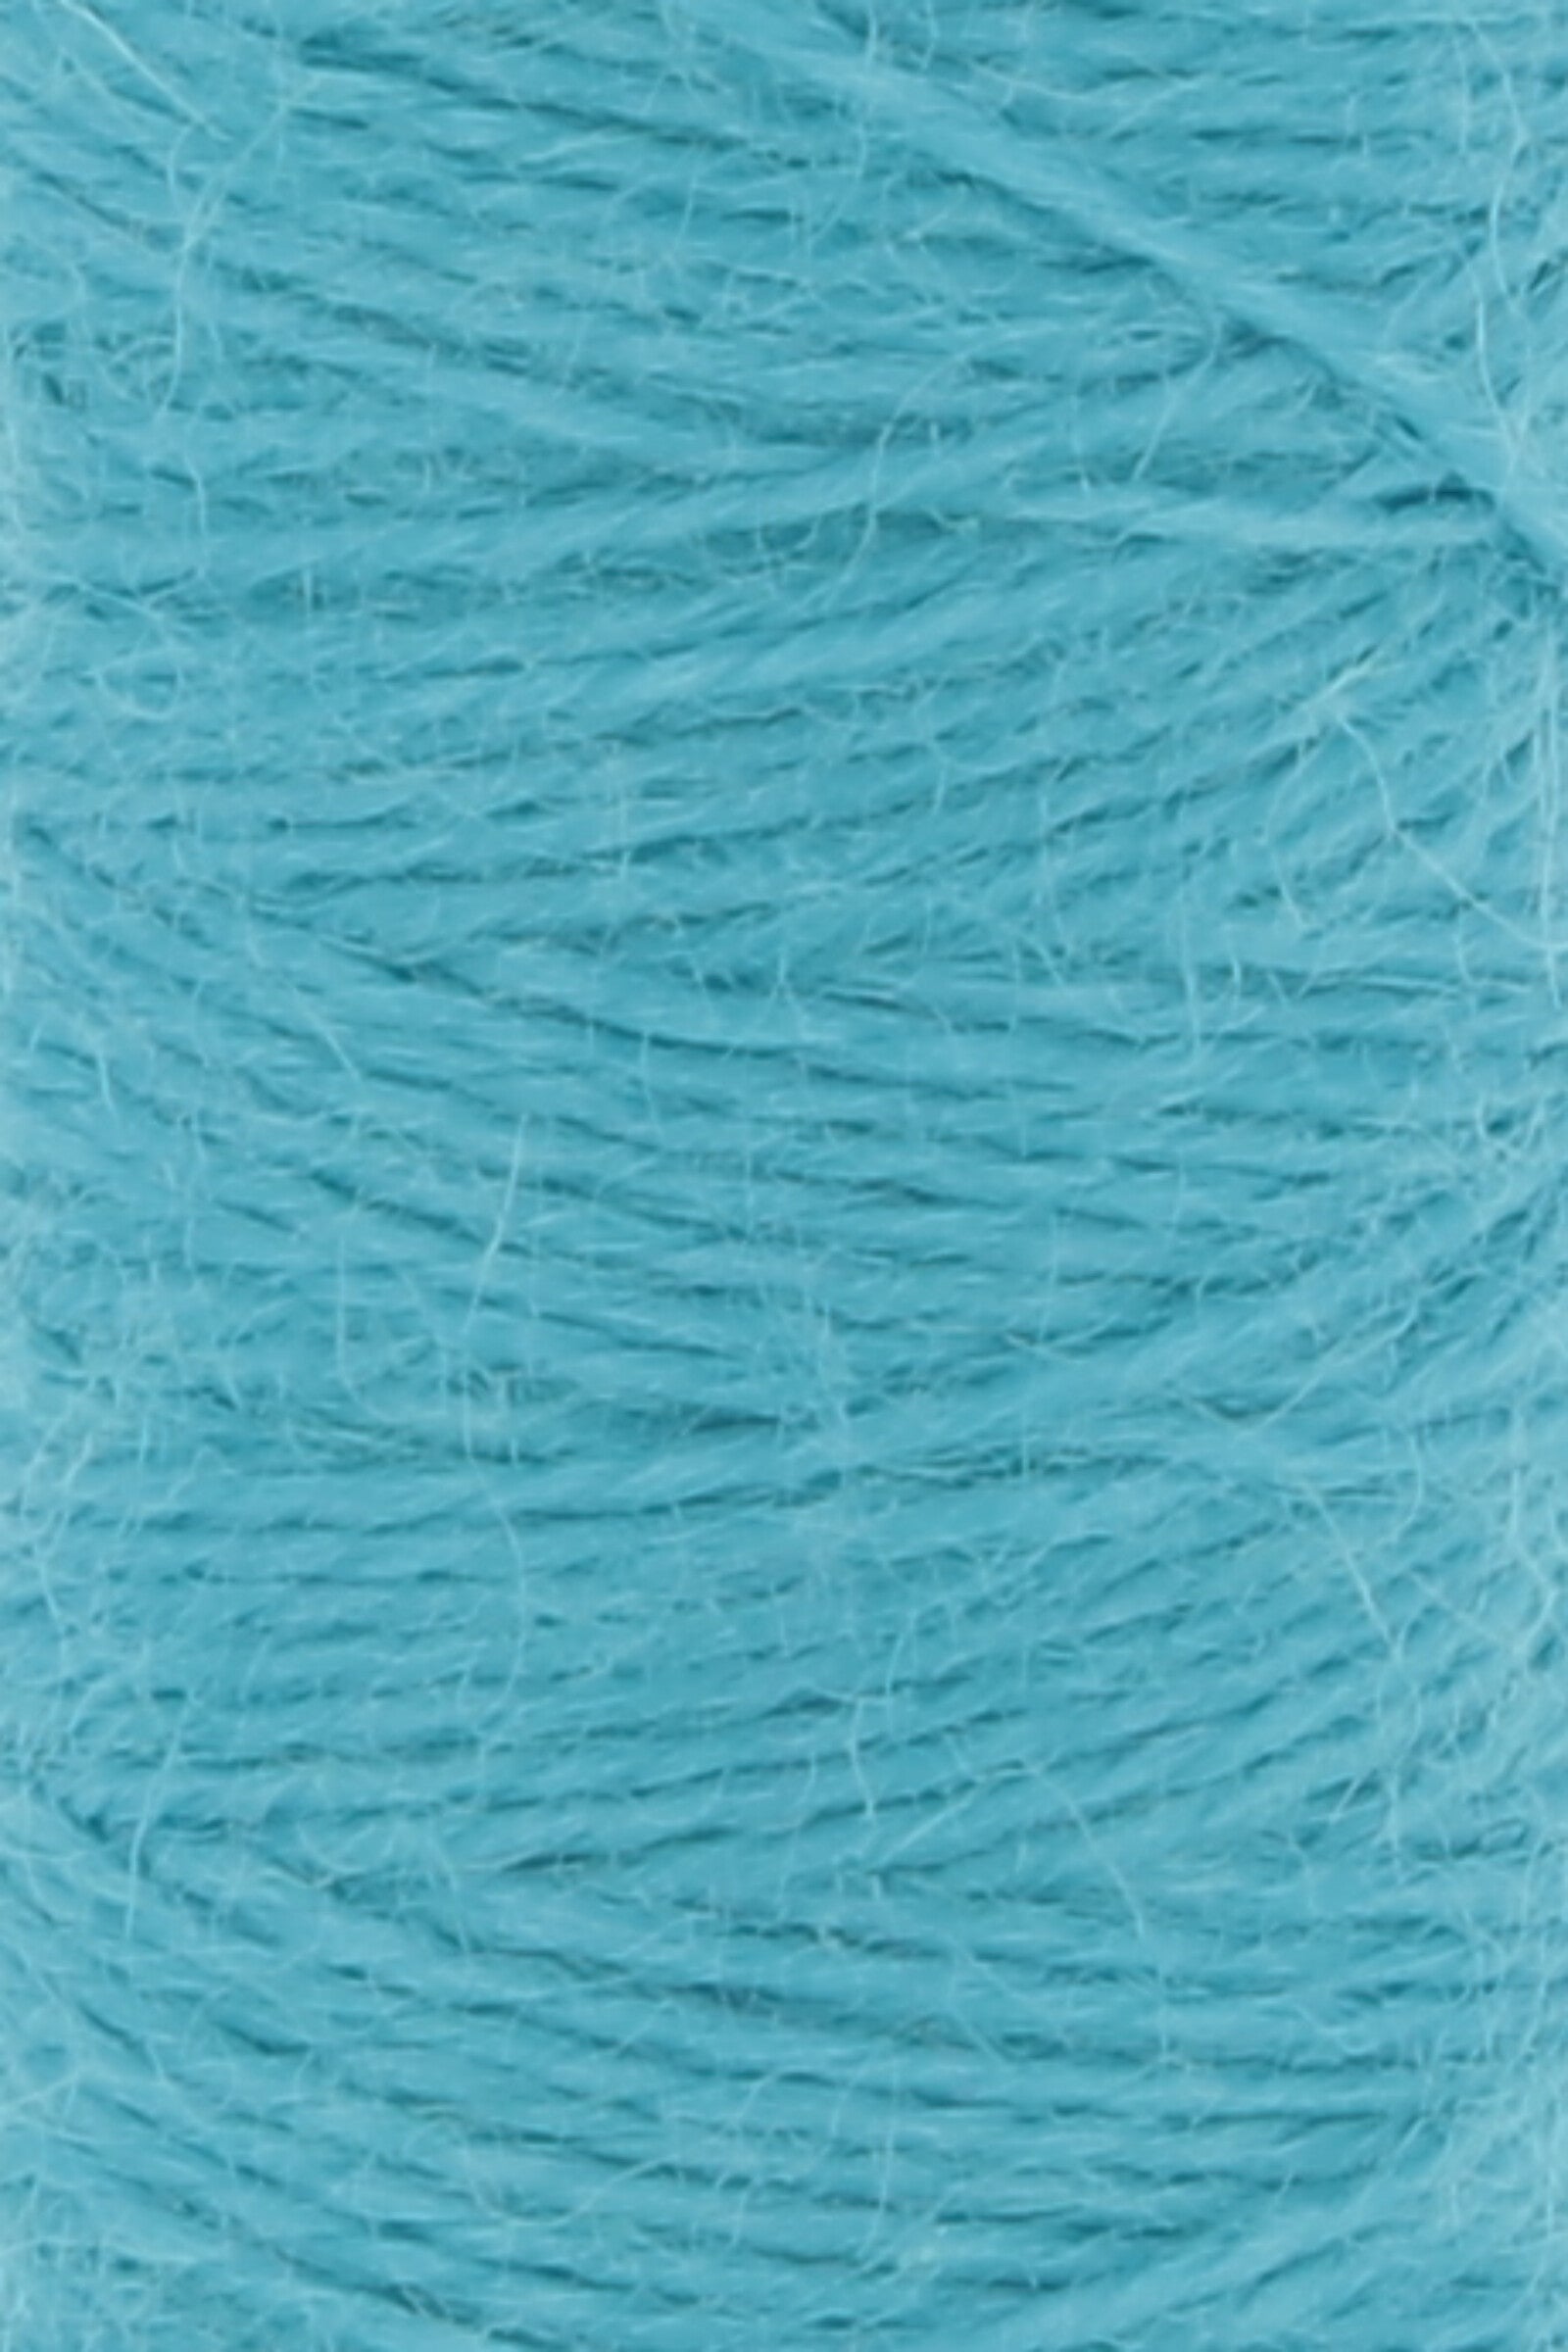 Jawoll Reinforcement Yarn Bobbins (Sock Darning Thread) - Needlepoint Joint